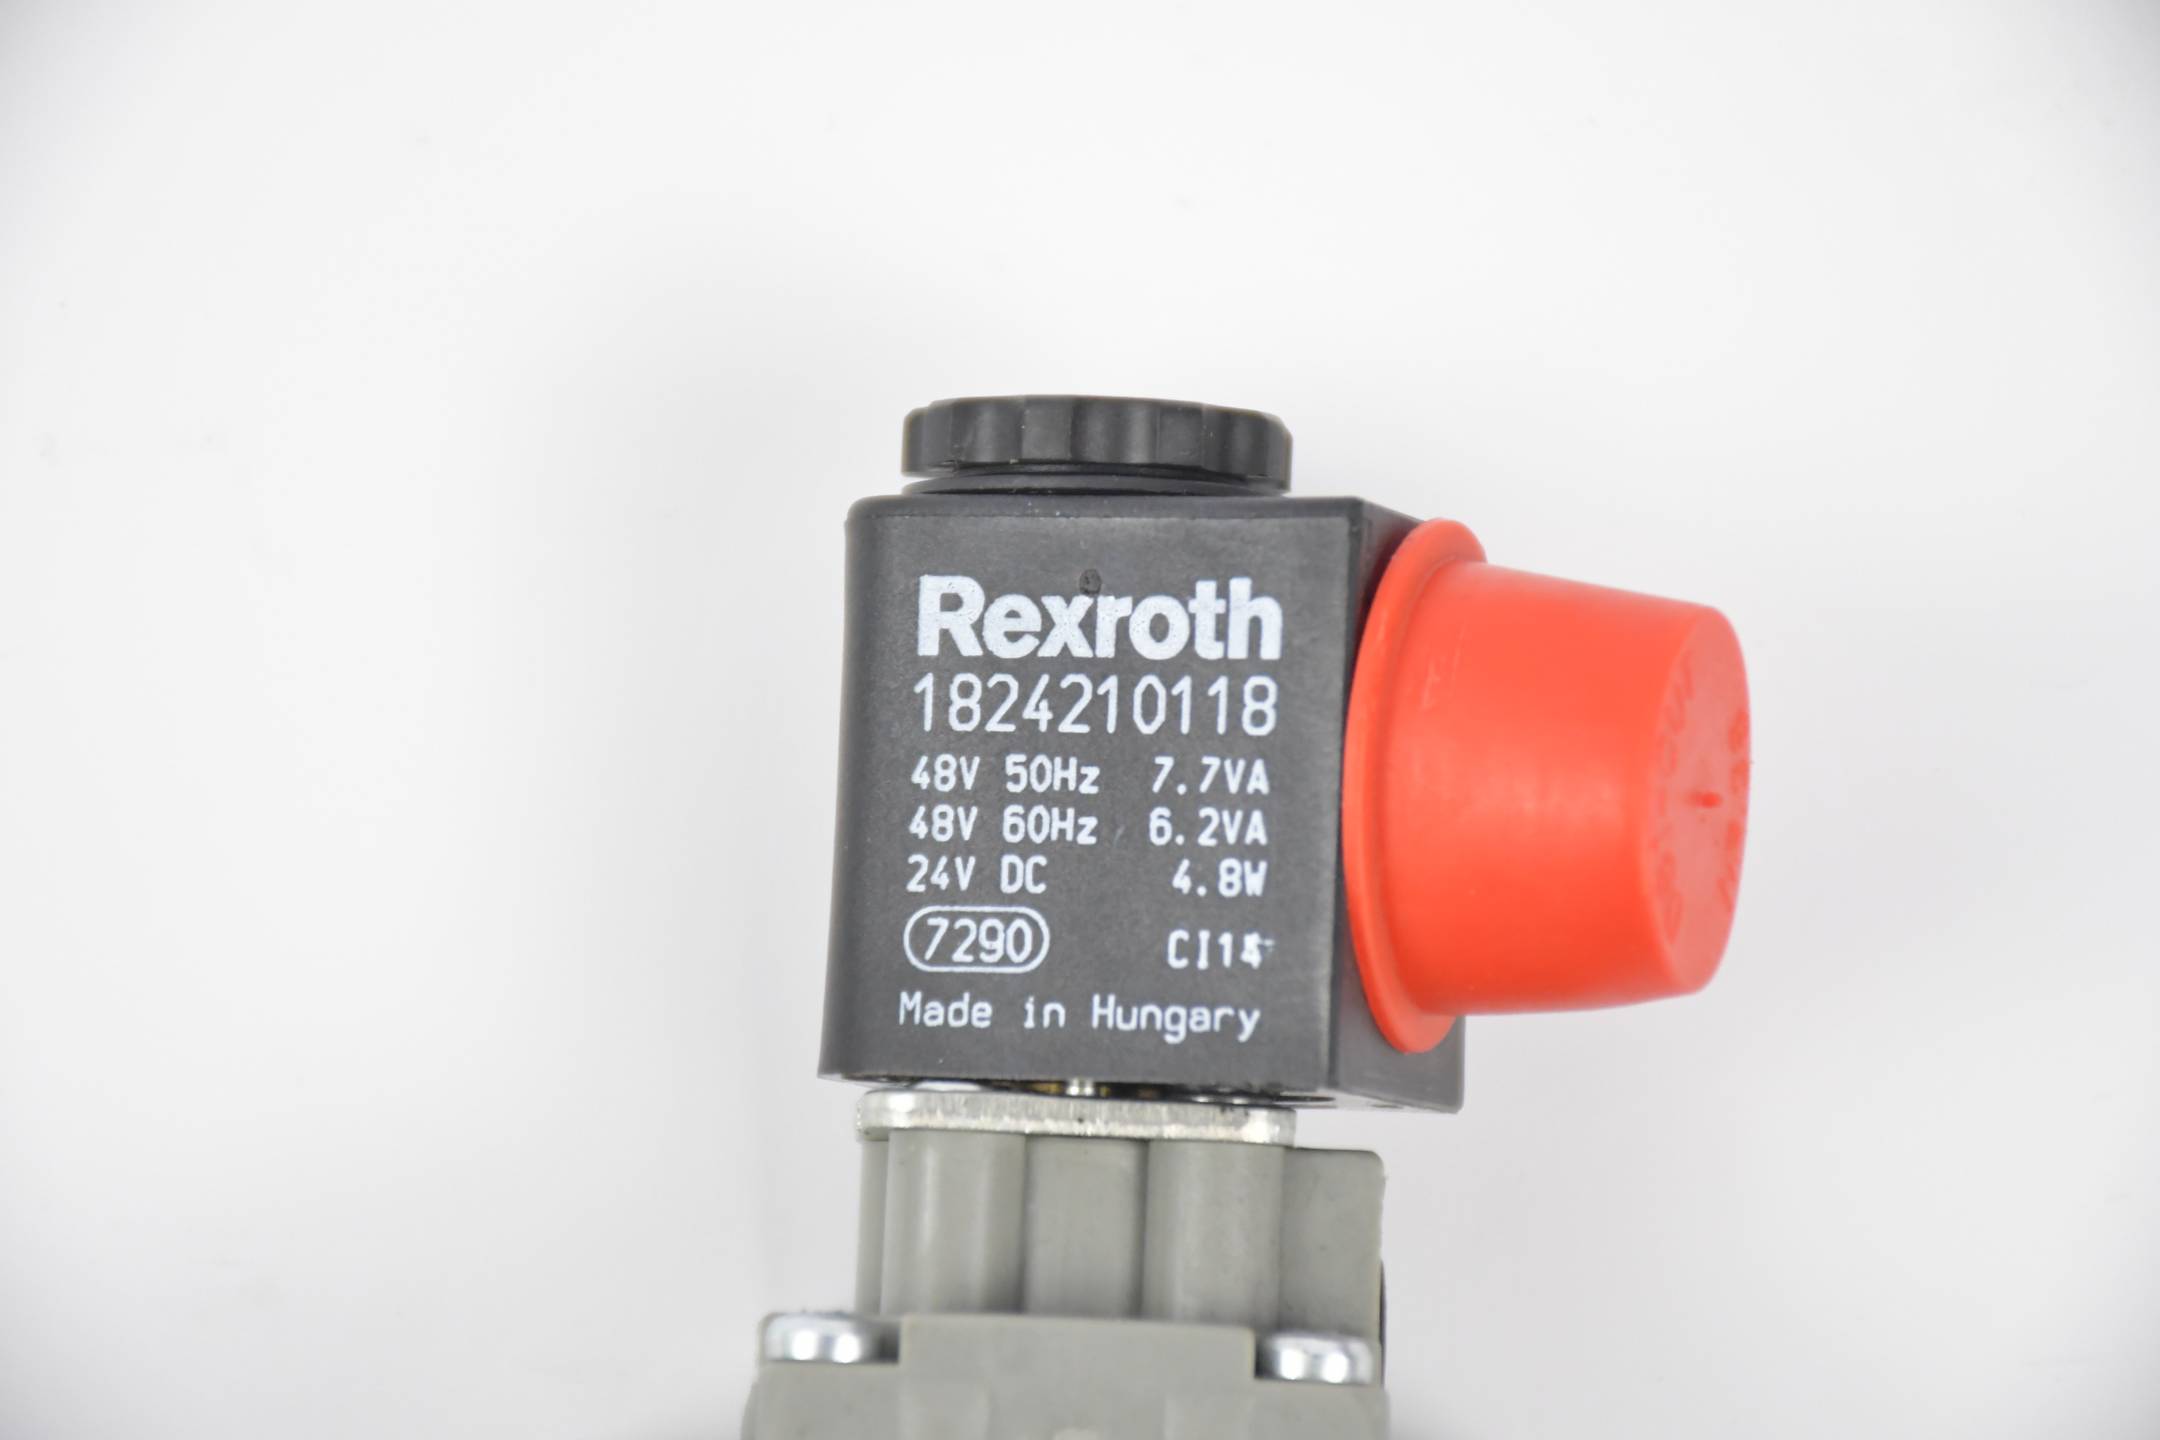 Rexroth Wegeventil 0820018103 ( 0 820 018 103 ) inkl. Magnetspule 1824210118